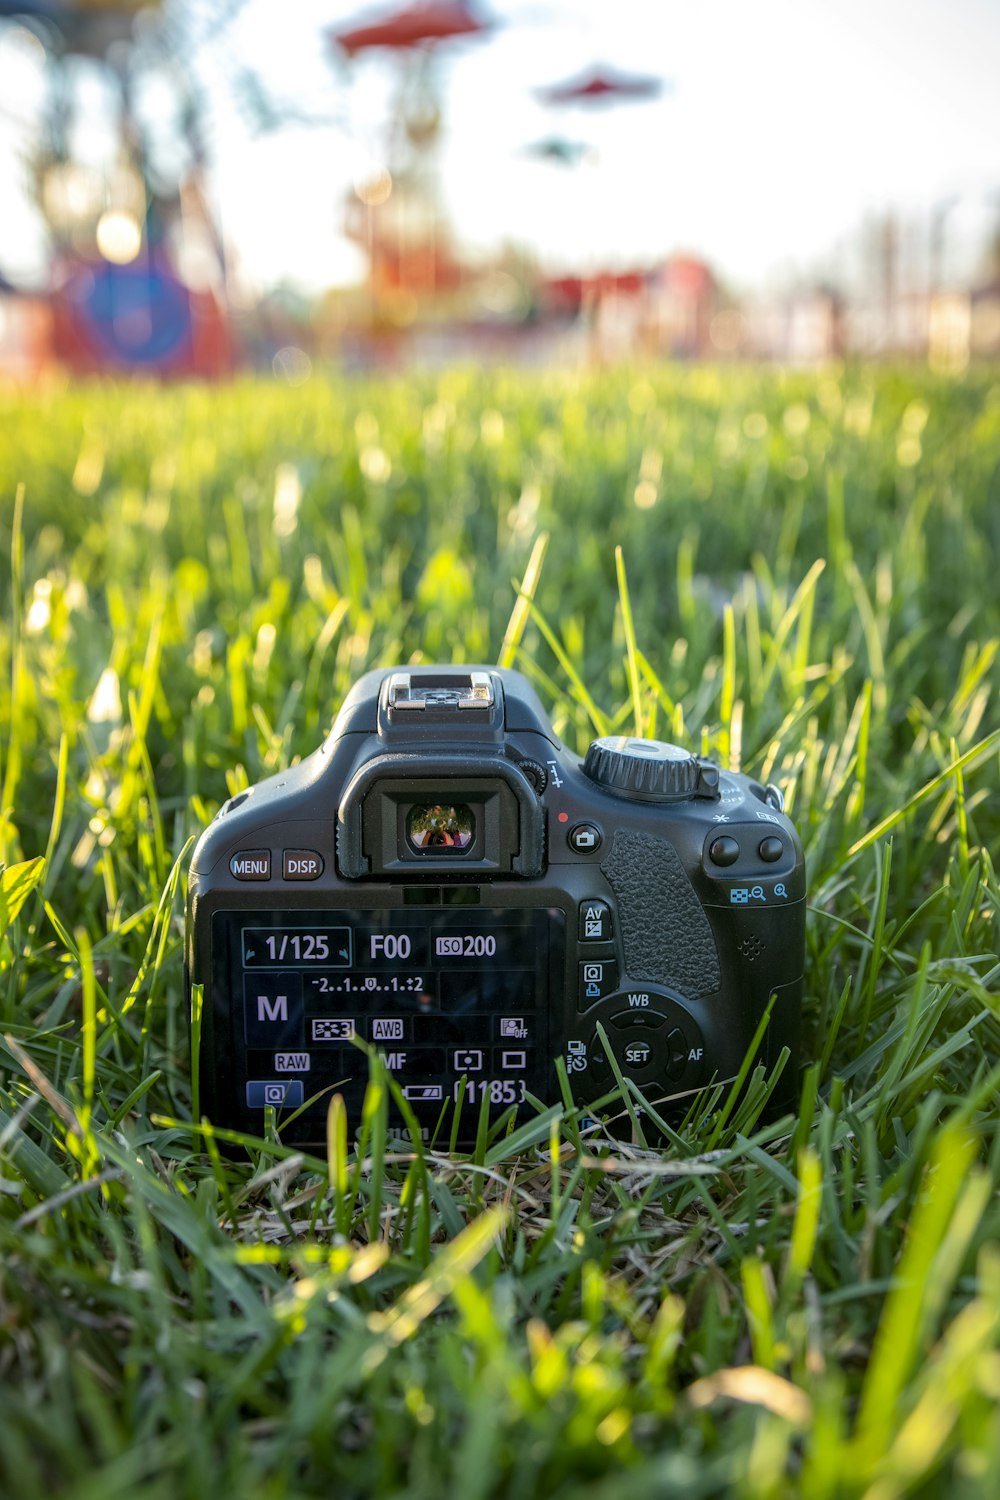 black nikon dslr camera on green grass during daytime photo – Free Camera  Image on Unsplash